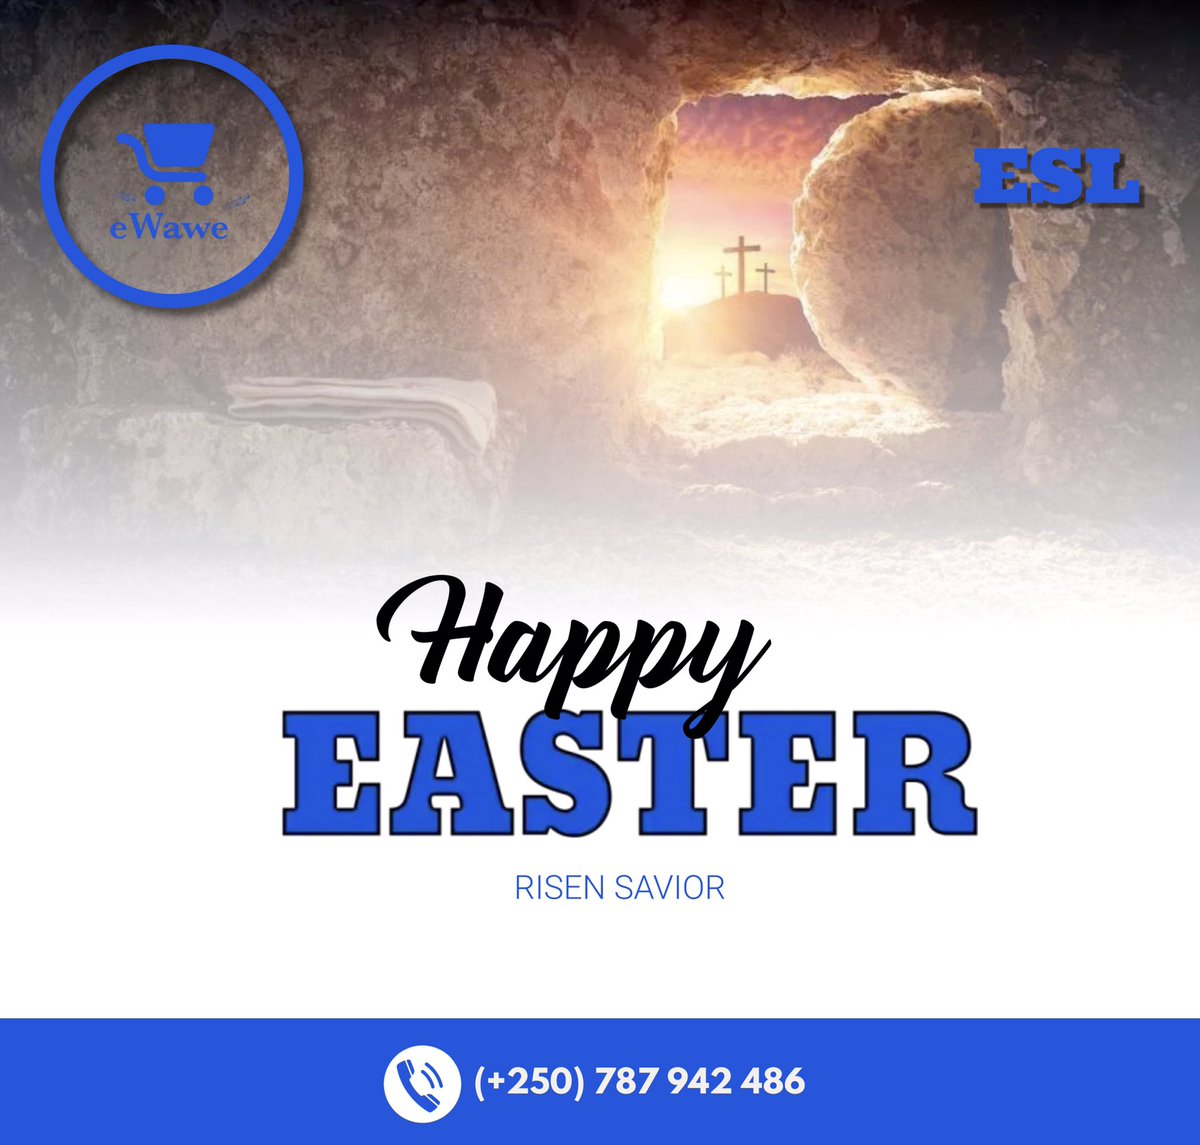 Easter greetings filled with joy and hope, extended to our valued ESL customers! #ewaweltd #ewawecustomers #rwanda